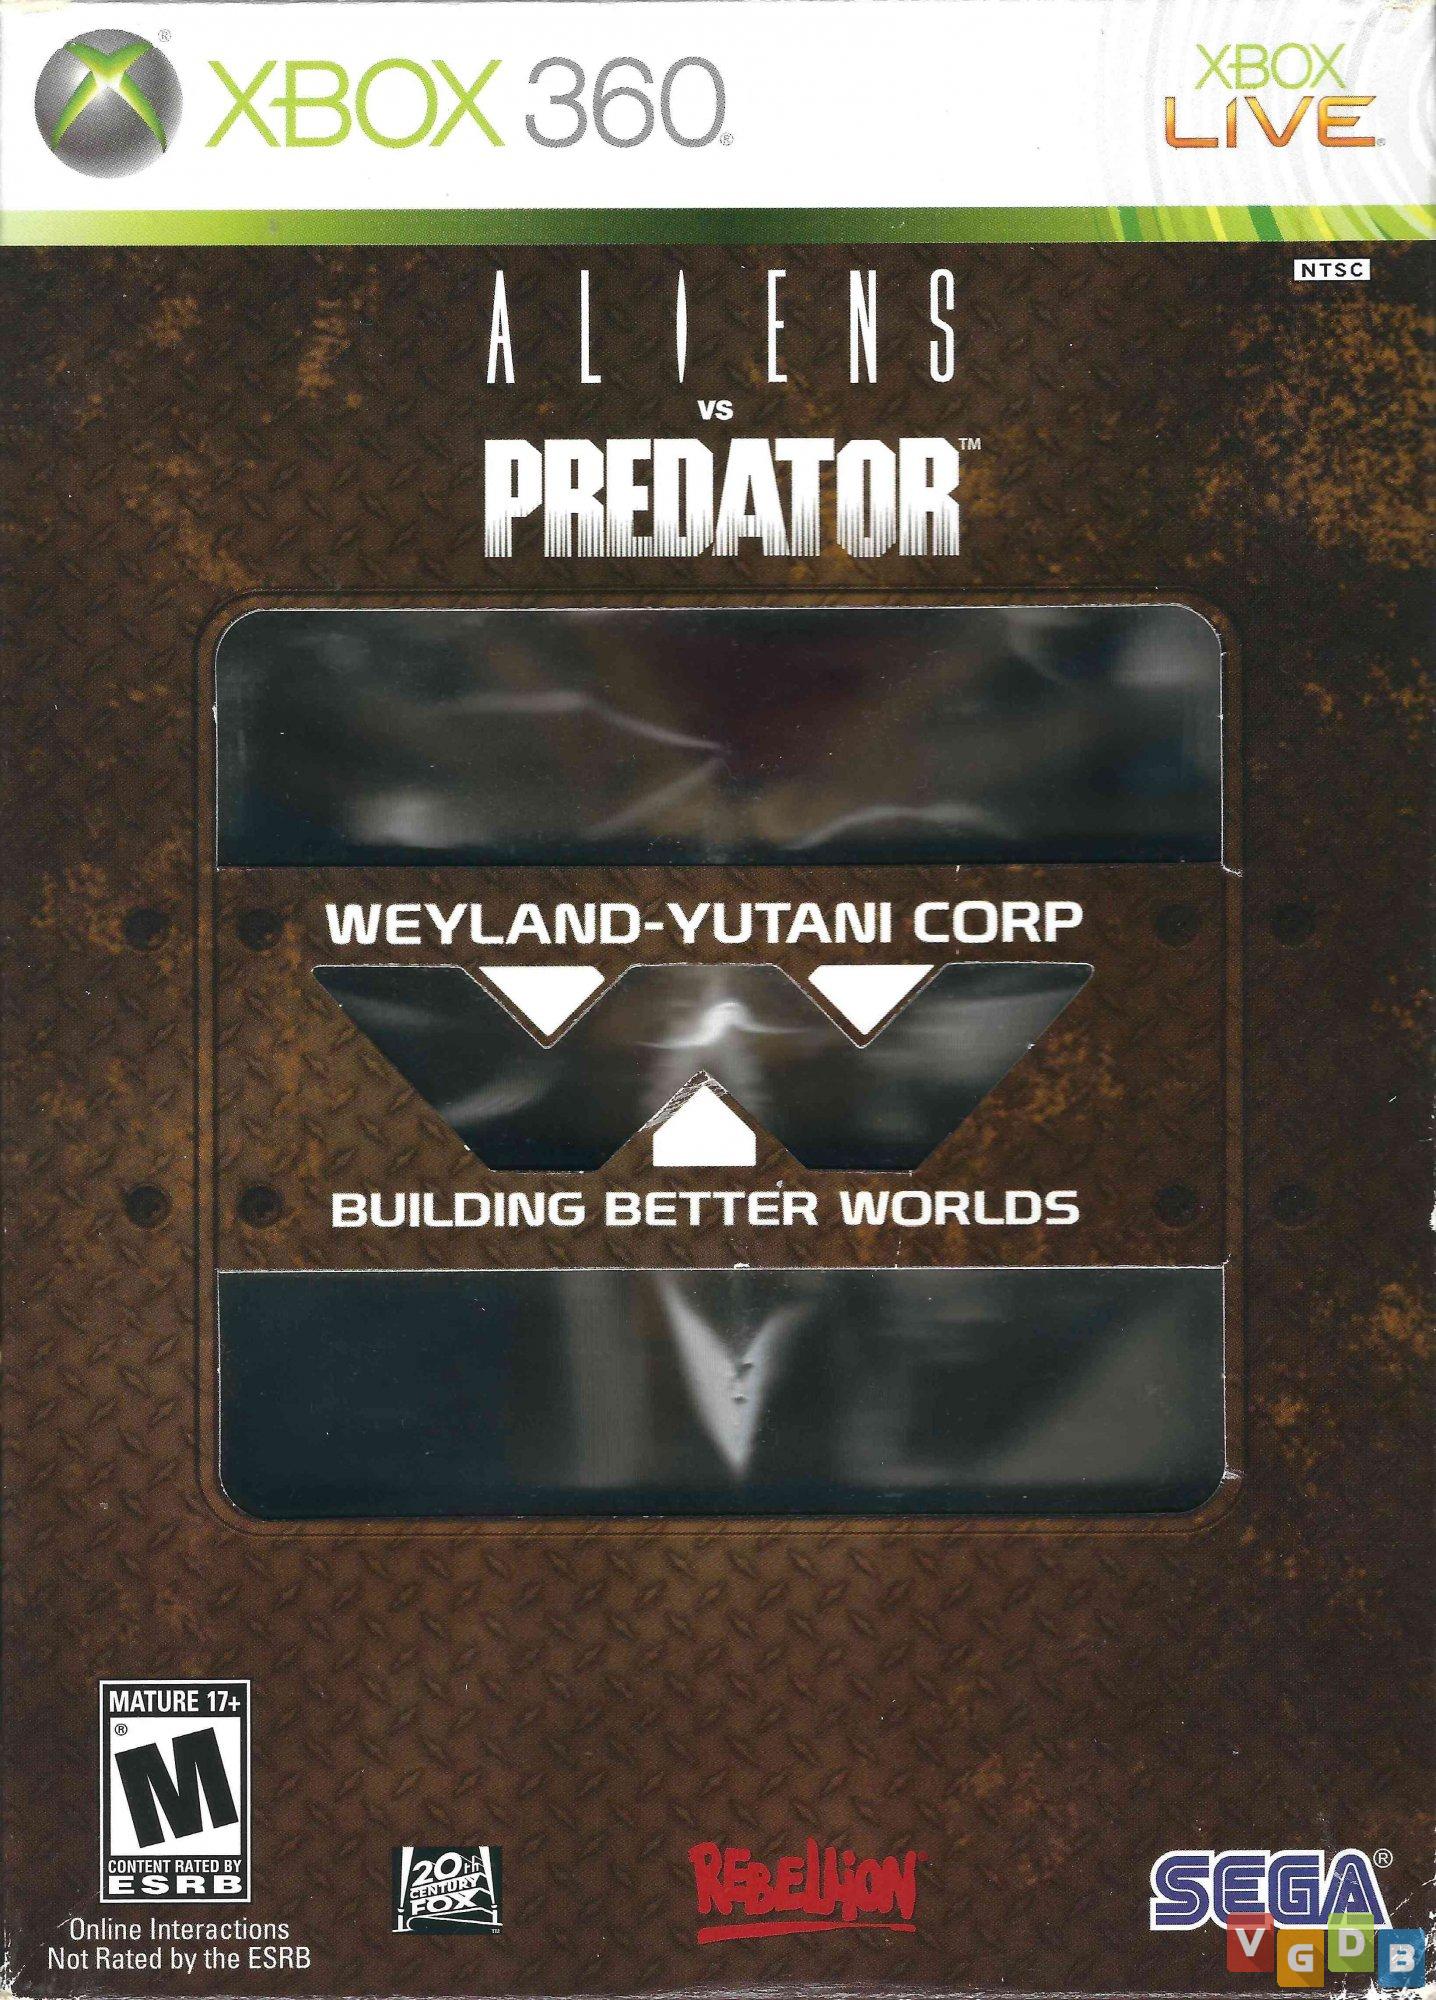 Aliens vs. Predator e Sonic entram na retrocompatibilidade do Xbox One